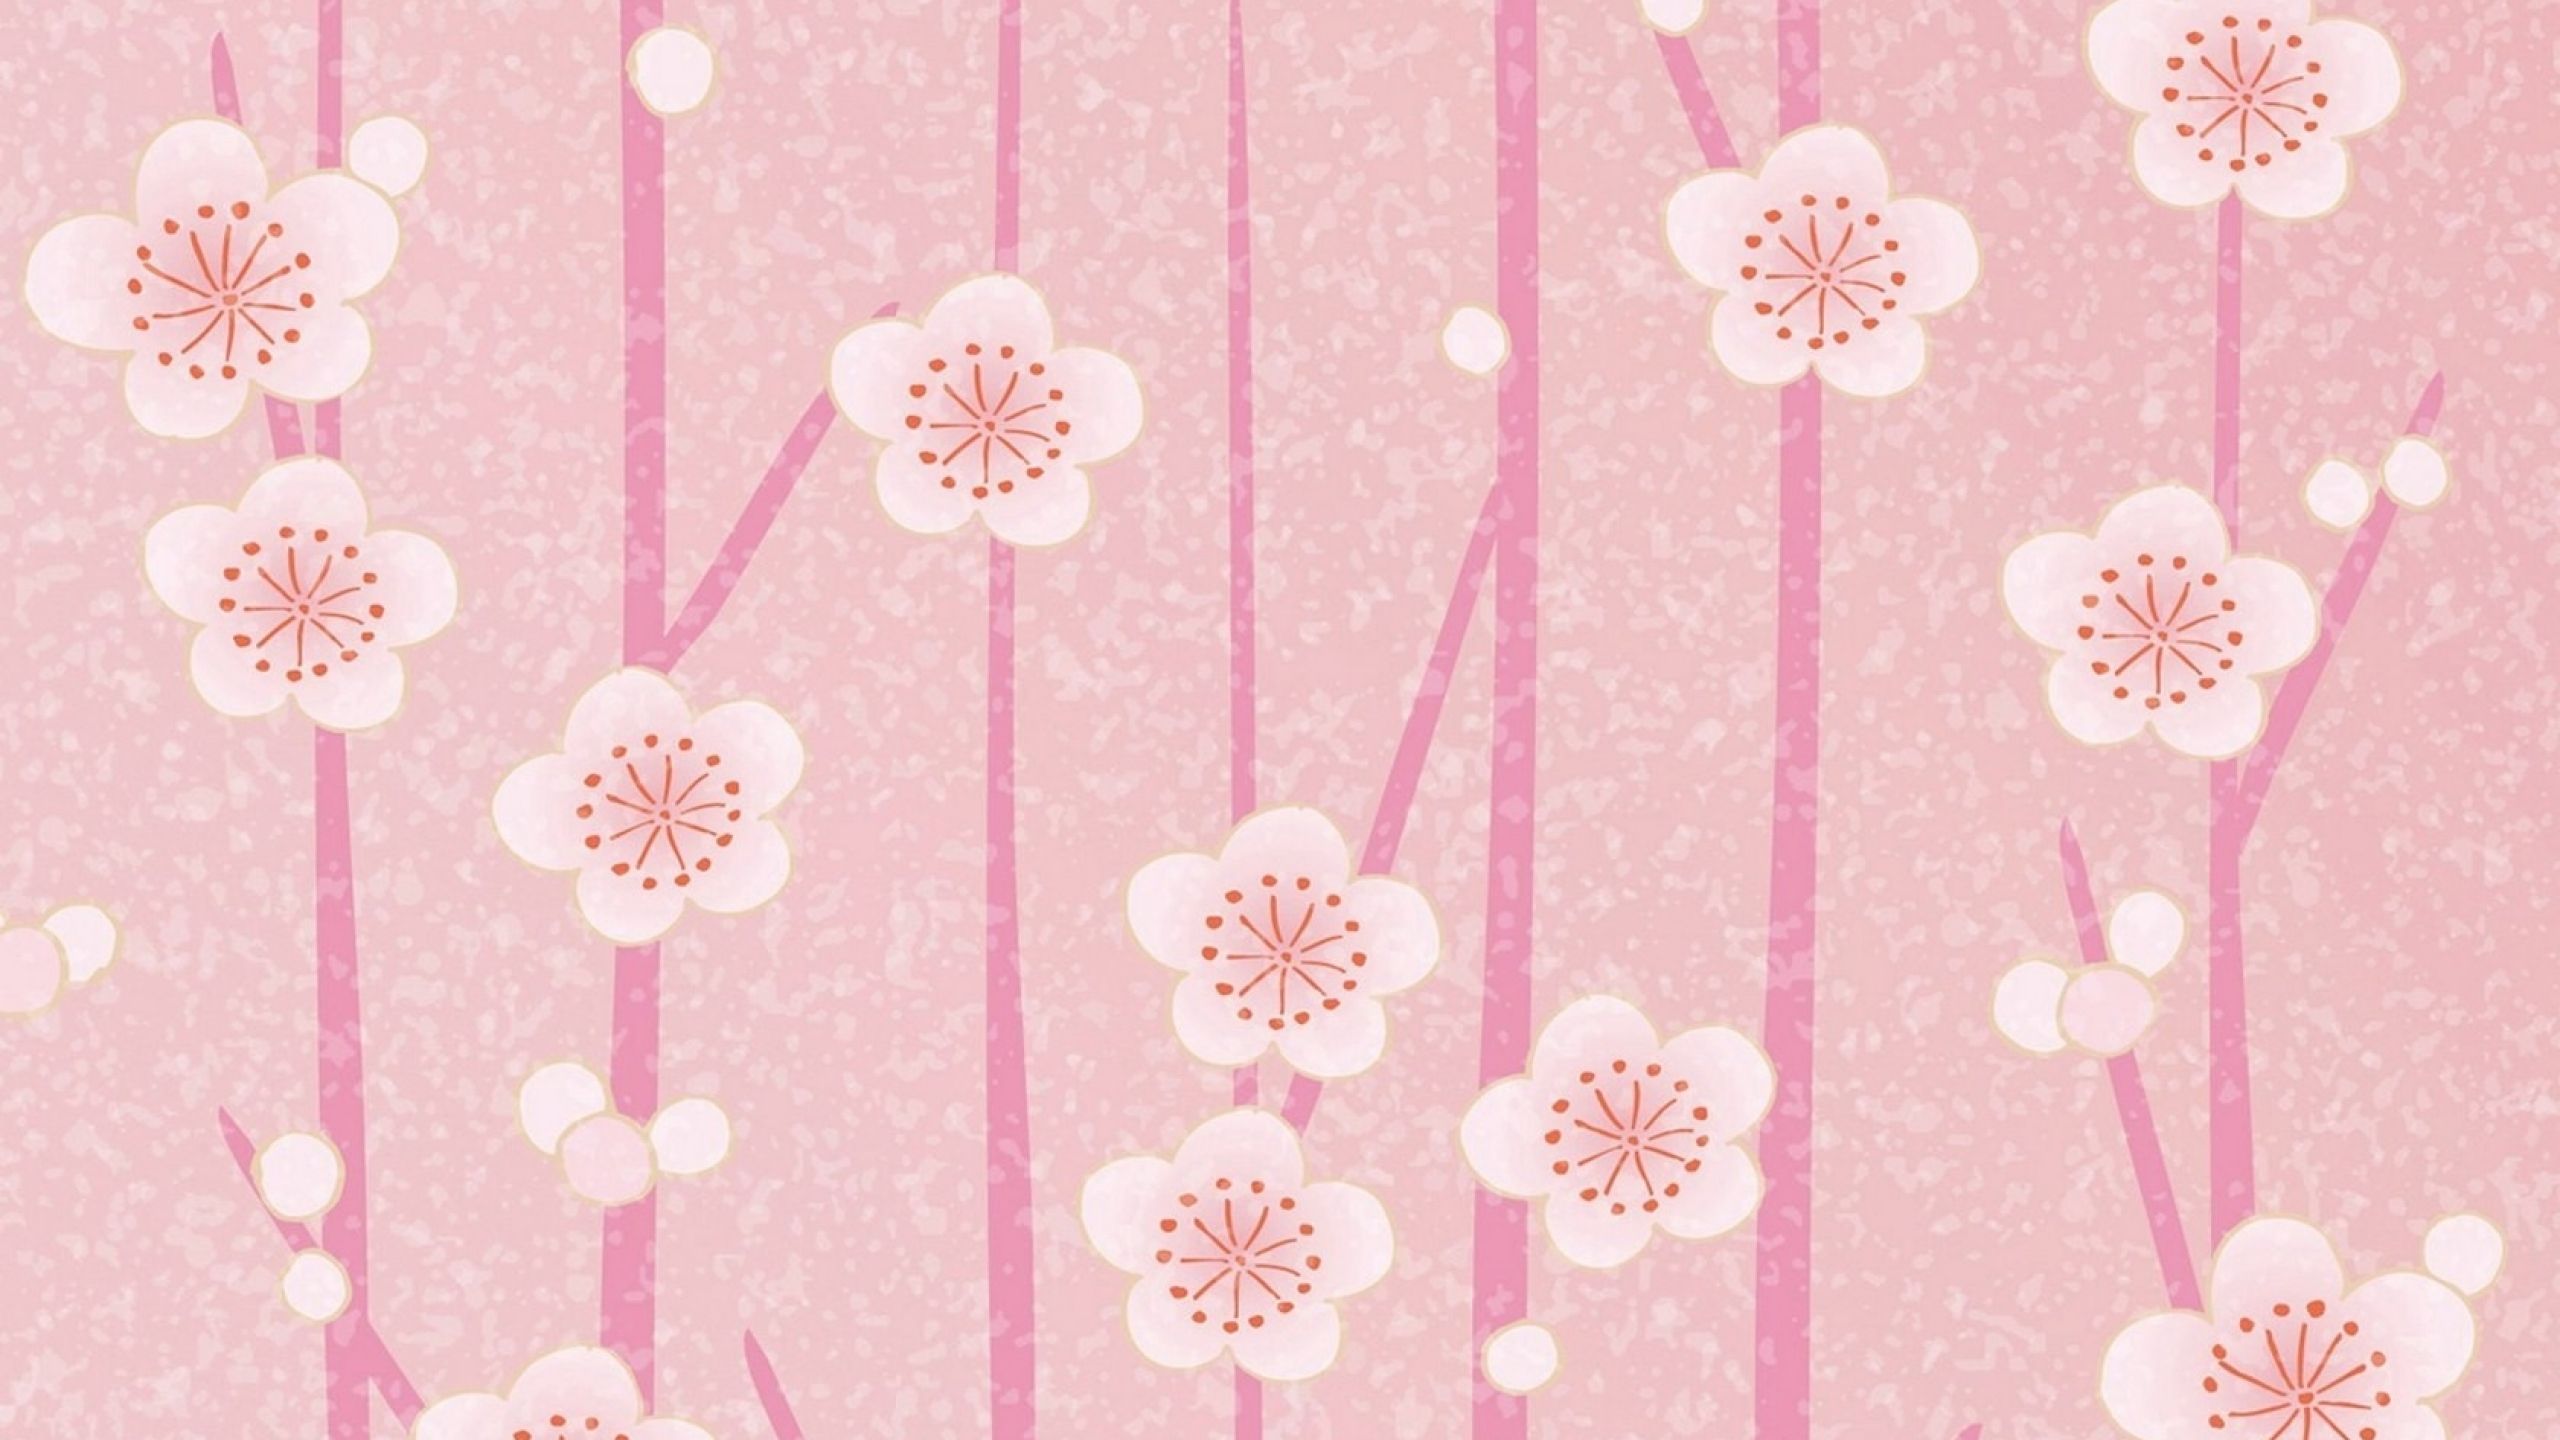 Pink texture wallpaper